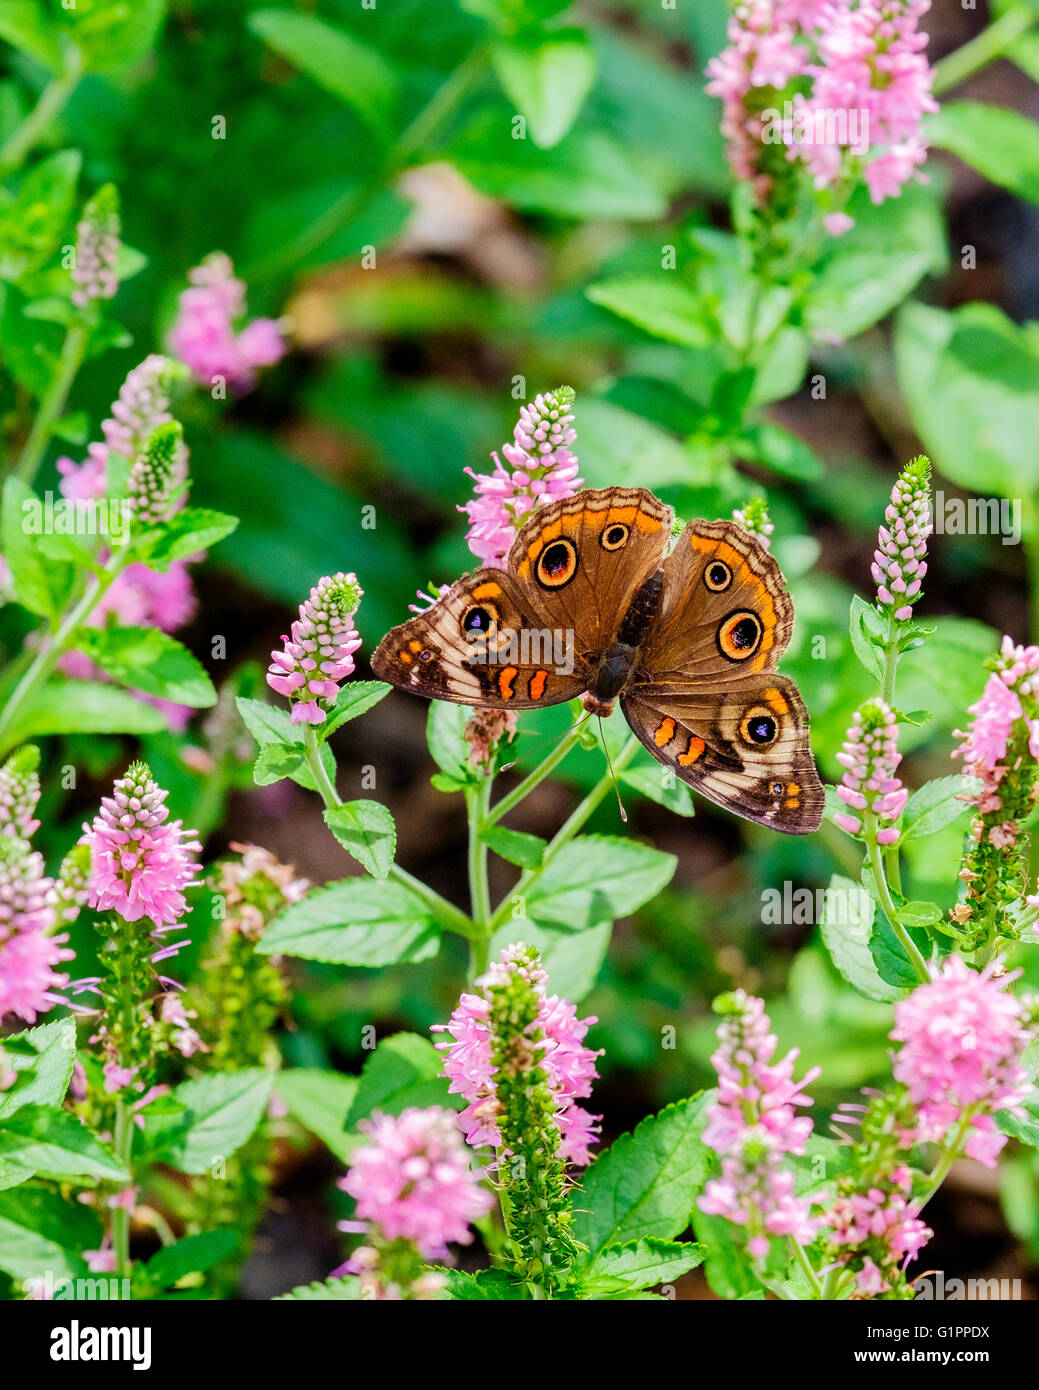 Buckeye commun papillon, Junonia coenia Hubner, sur Agatache fleurs d'hysope. New York, USA. Banque D'Images